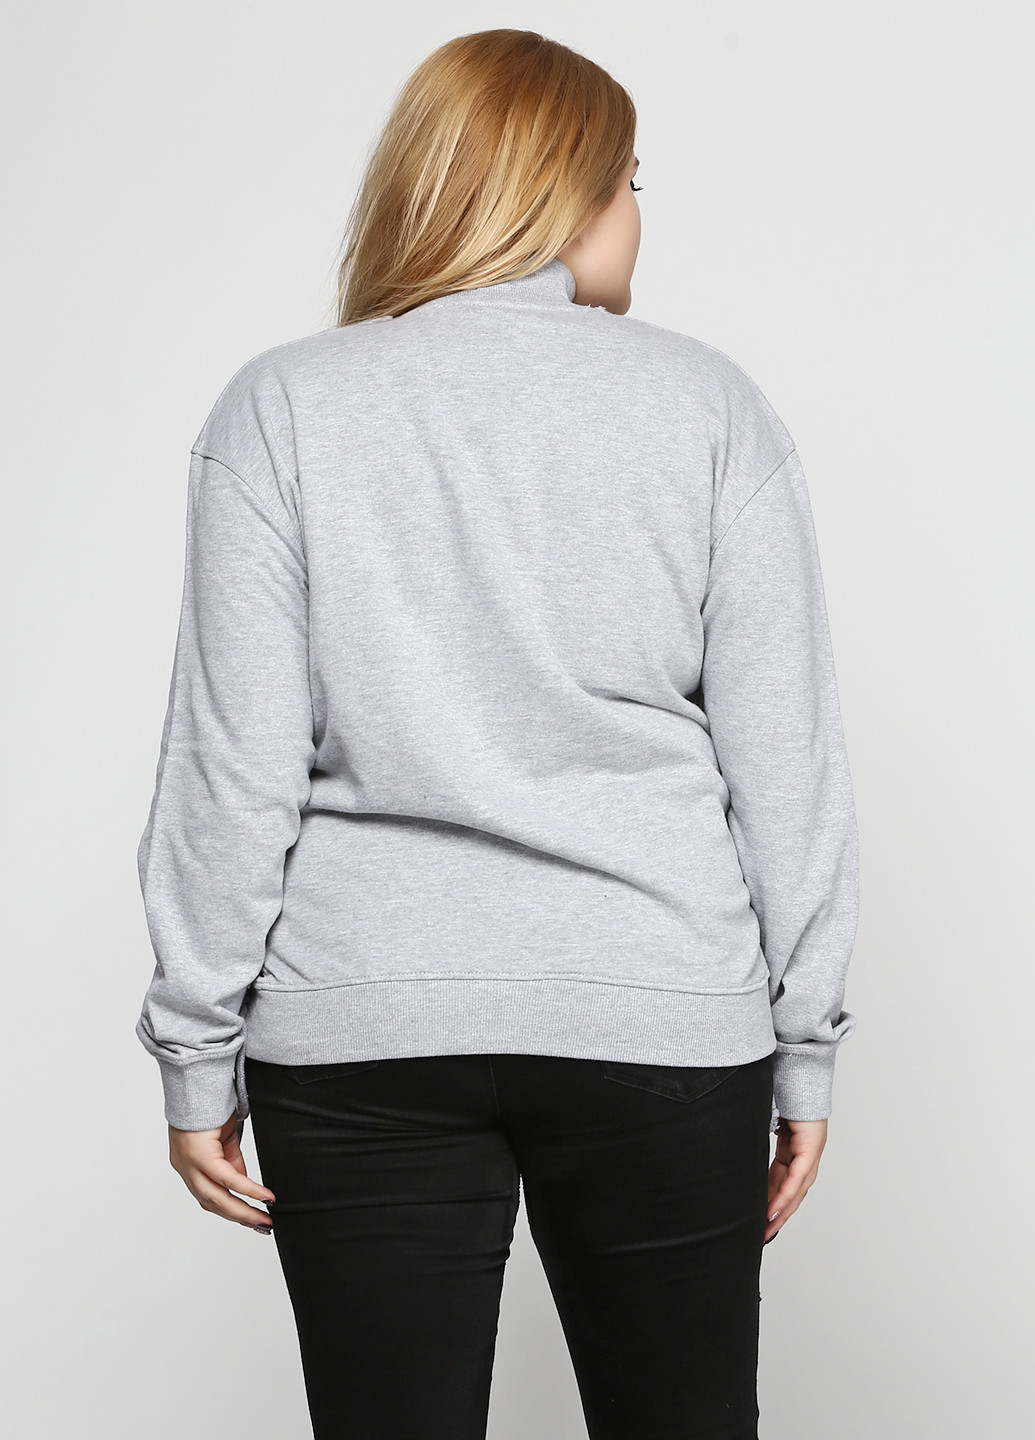 Серый демисезонный пуловер пуловер Missguided